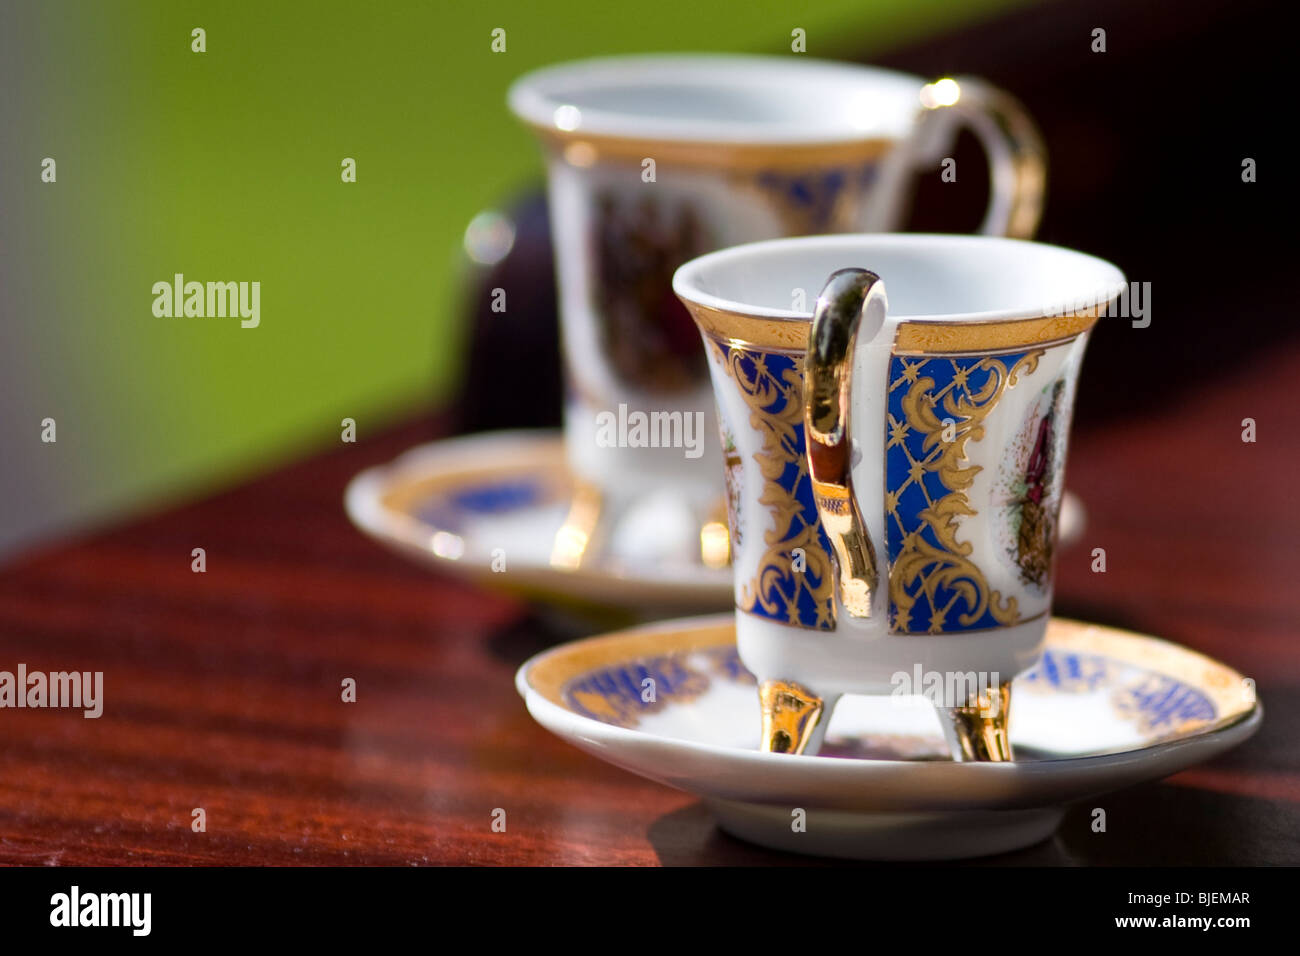 https://c8.alamy.com/comp/BJEMAR/two-tea-cups-on-a-table-close-up-BJEMAR.jpg